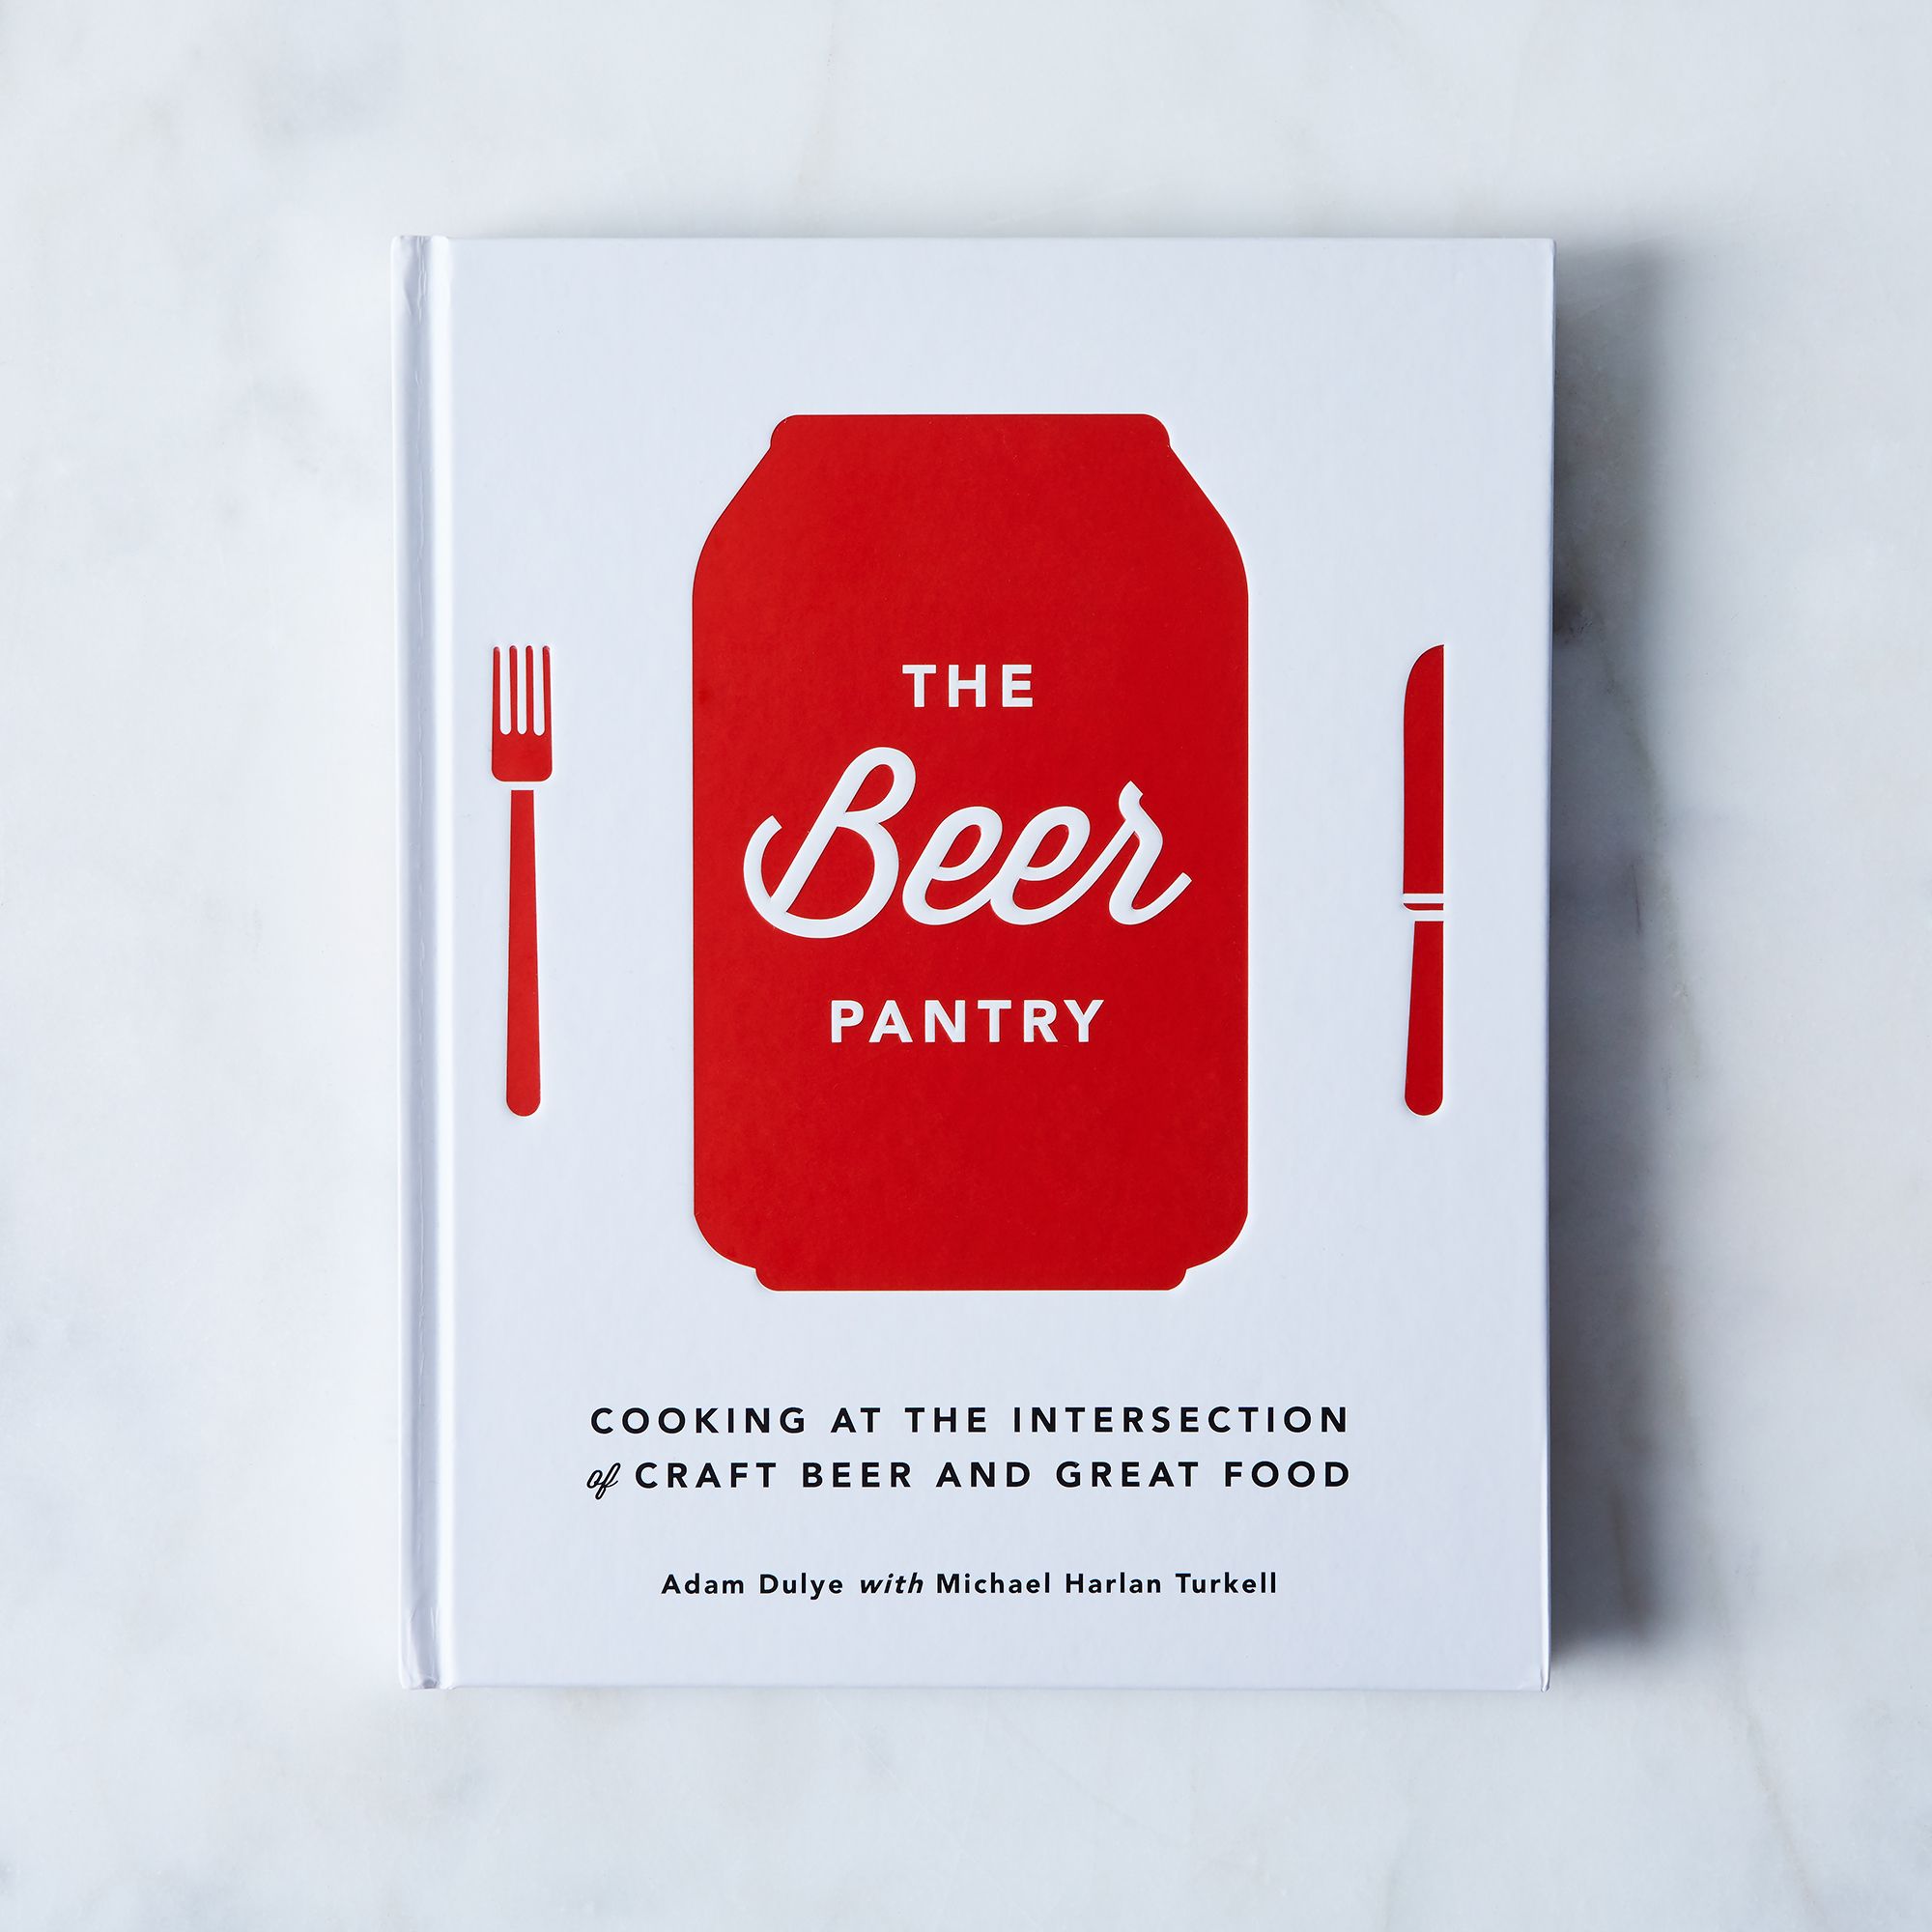 The Beer Pantry & Capper - The Beer Pantry